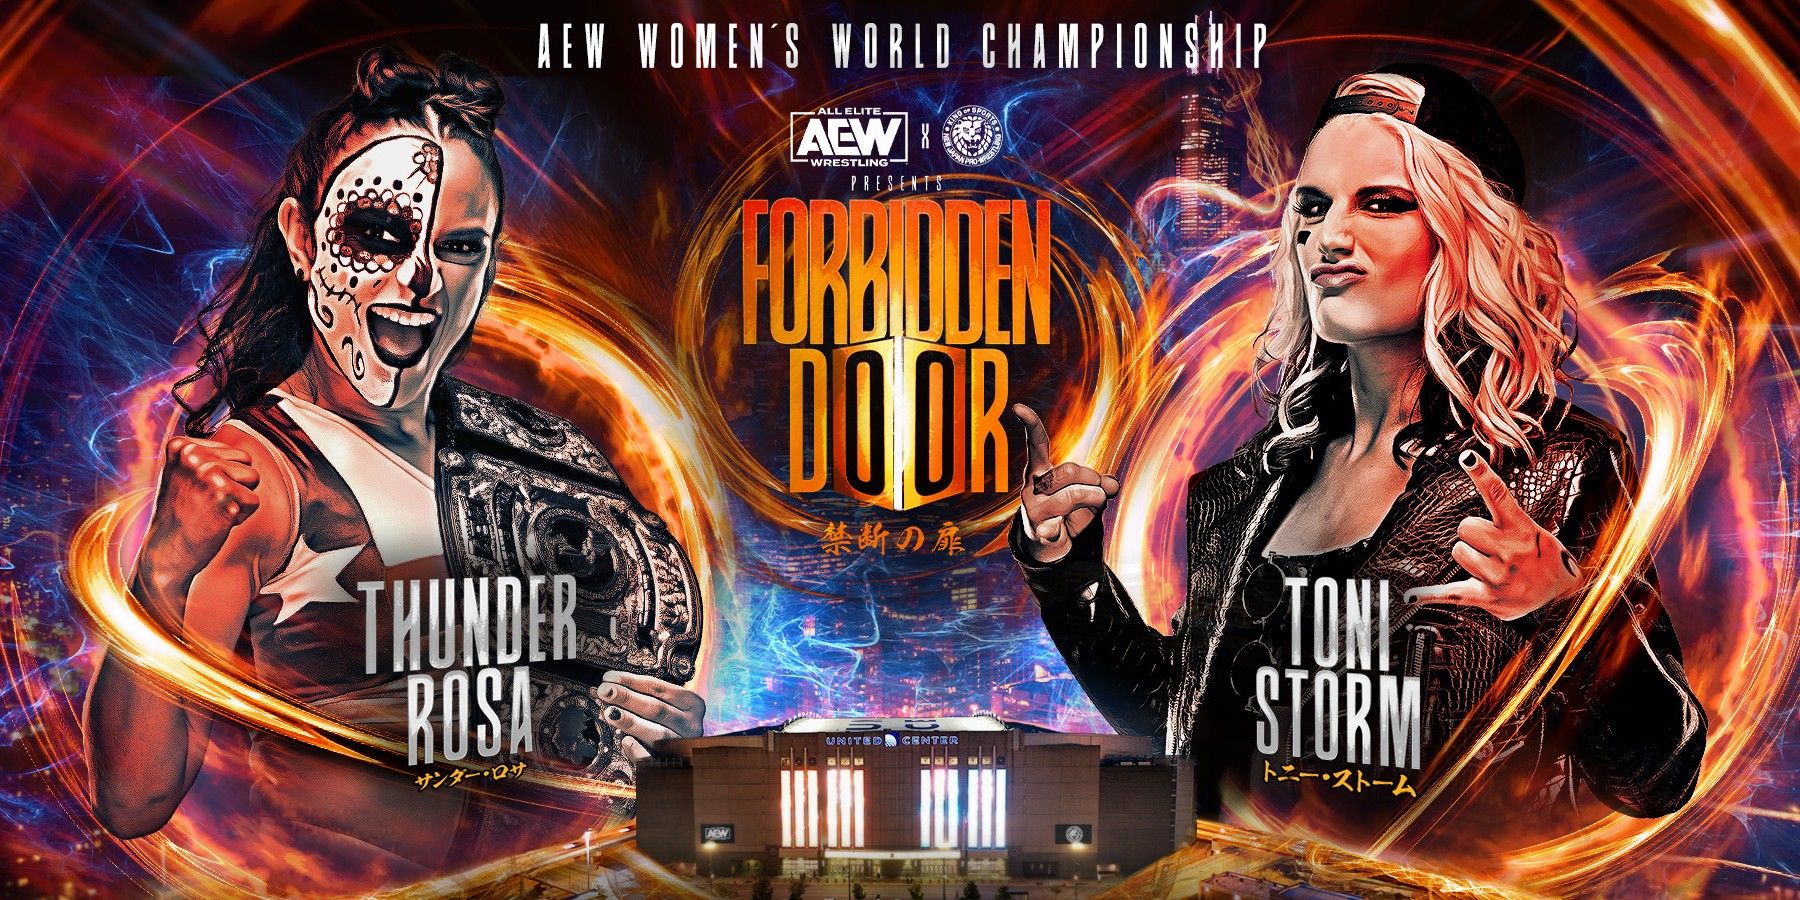 Thunder Rosa and Toni Storm Forbidden Door graphic